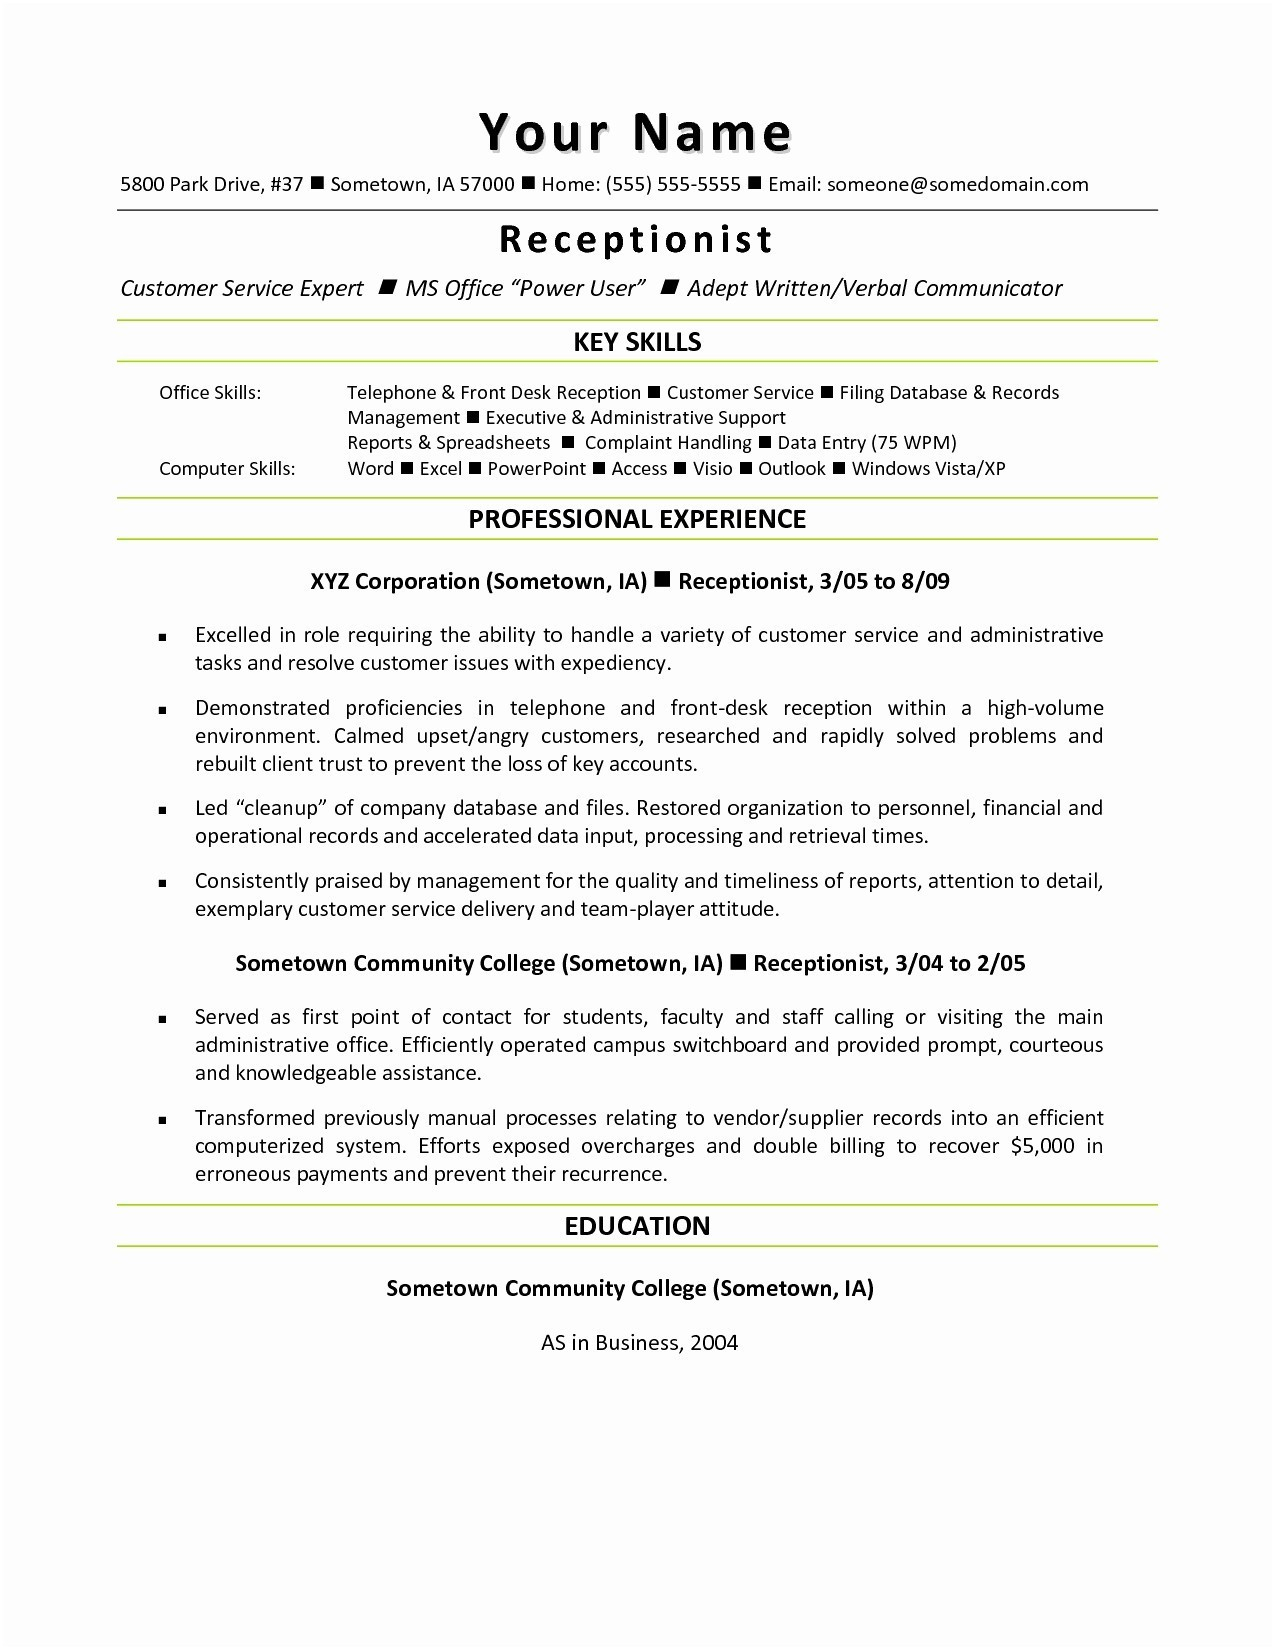 Resume Cover Letter Template Word Free - Resume Microsoft Word Fresh Resume Mail format Sample Fresh